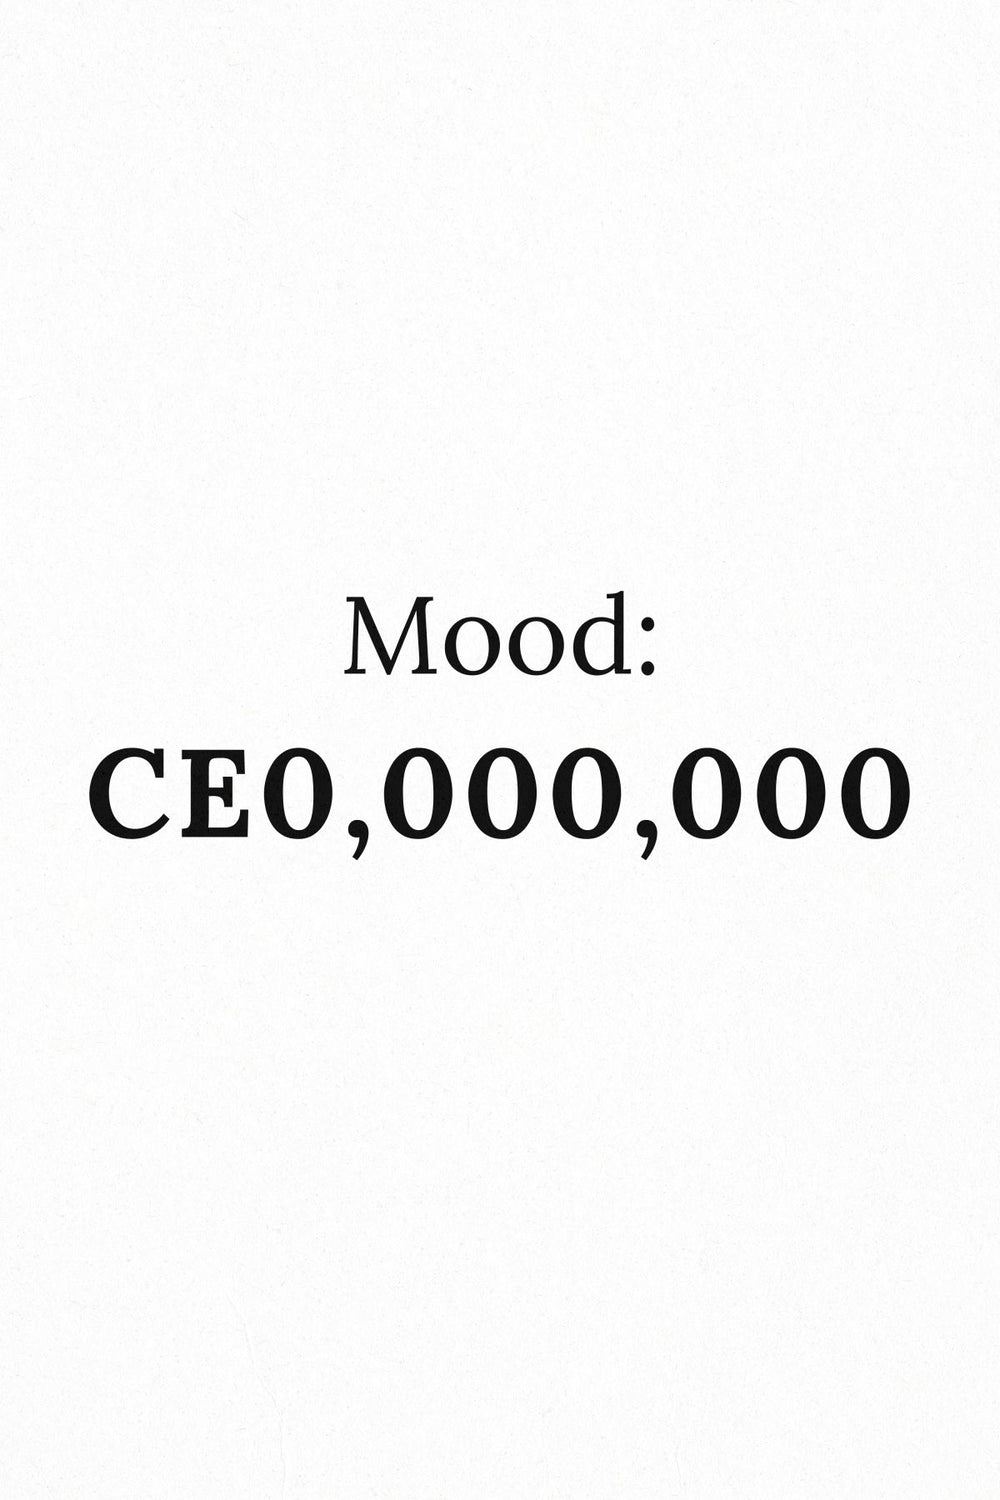 CEO Mood